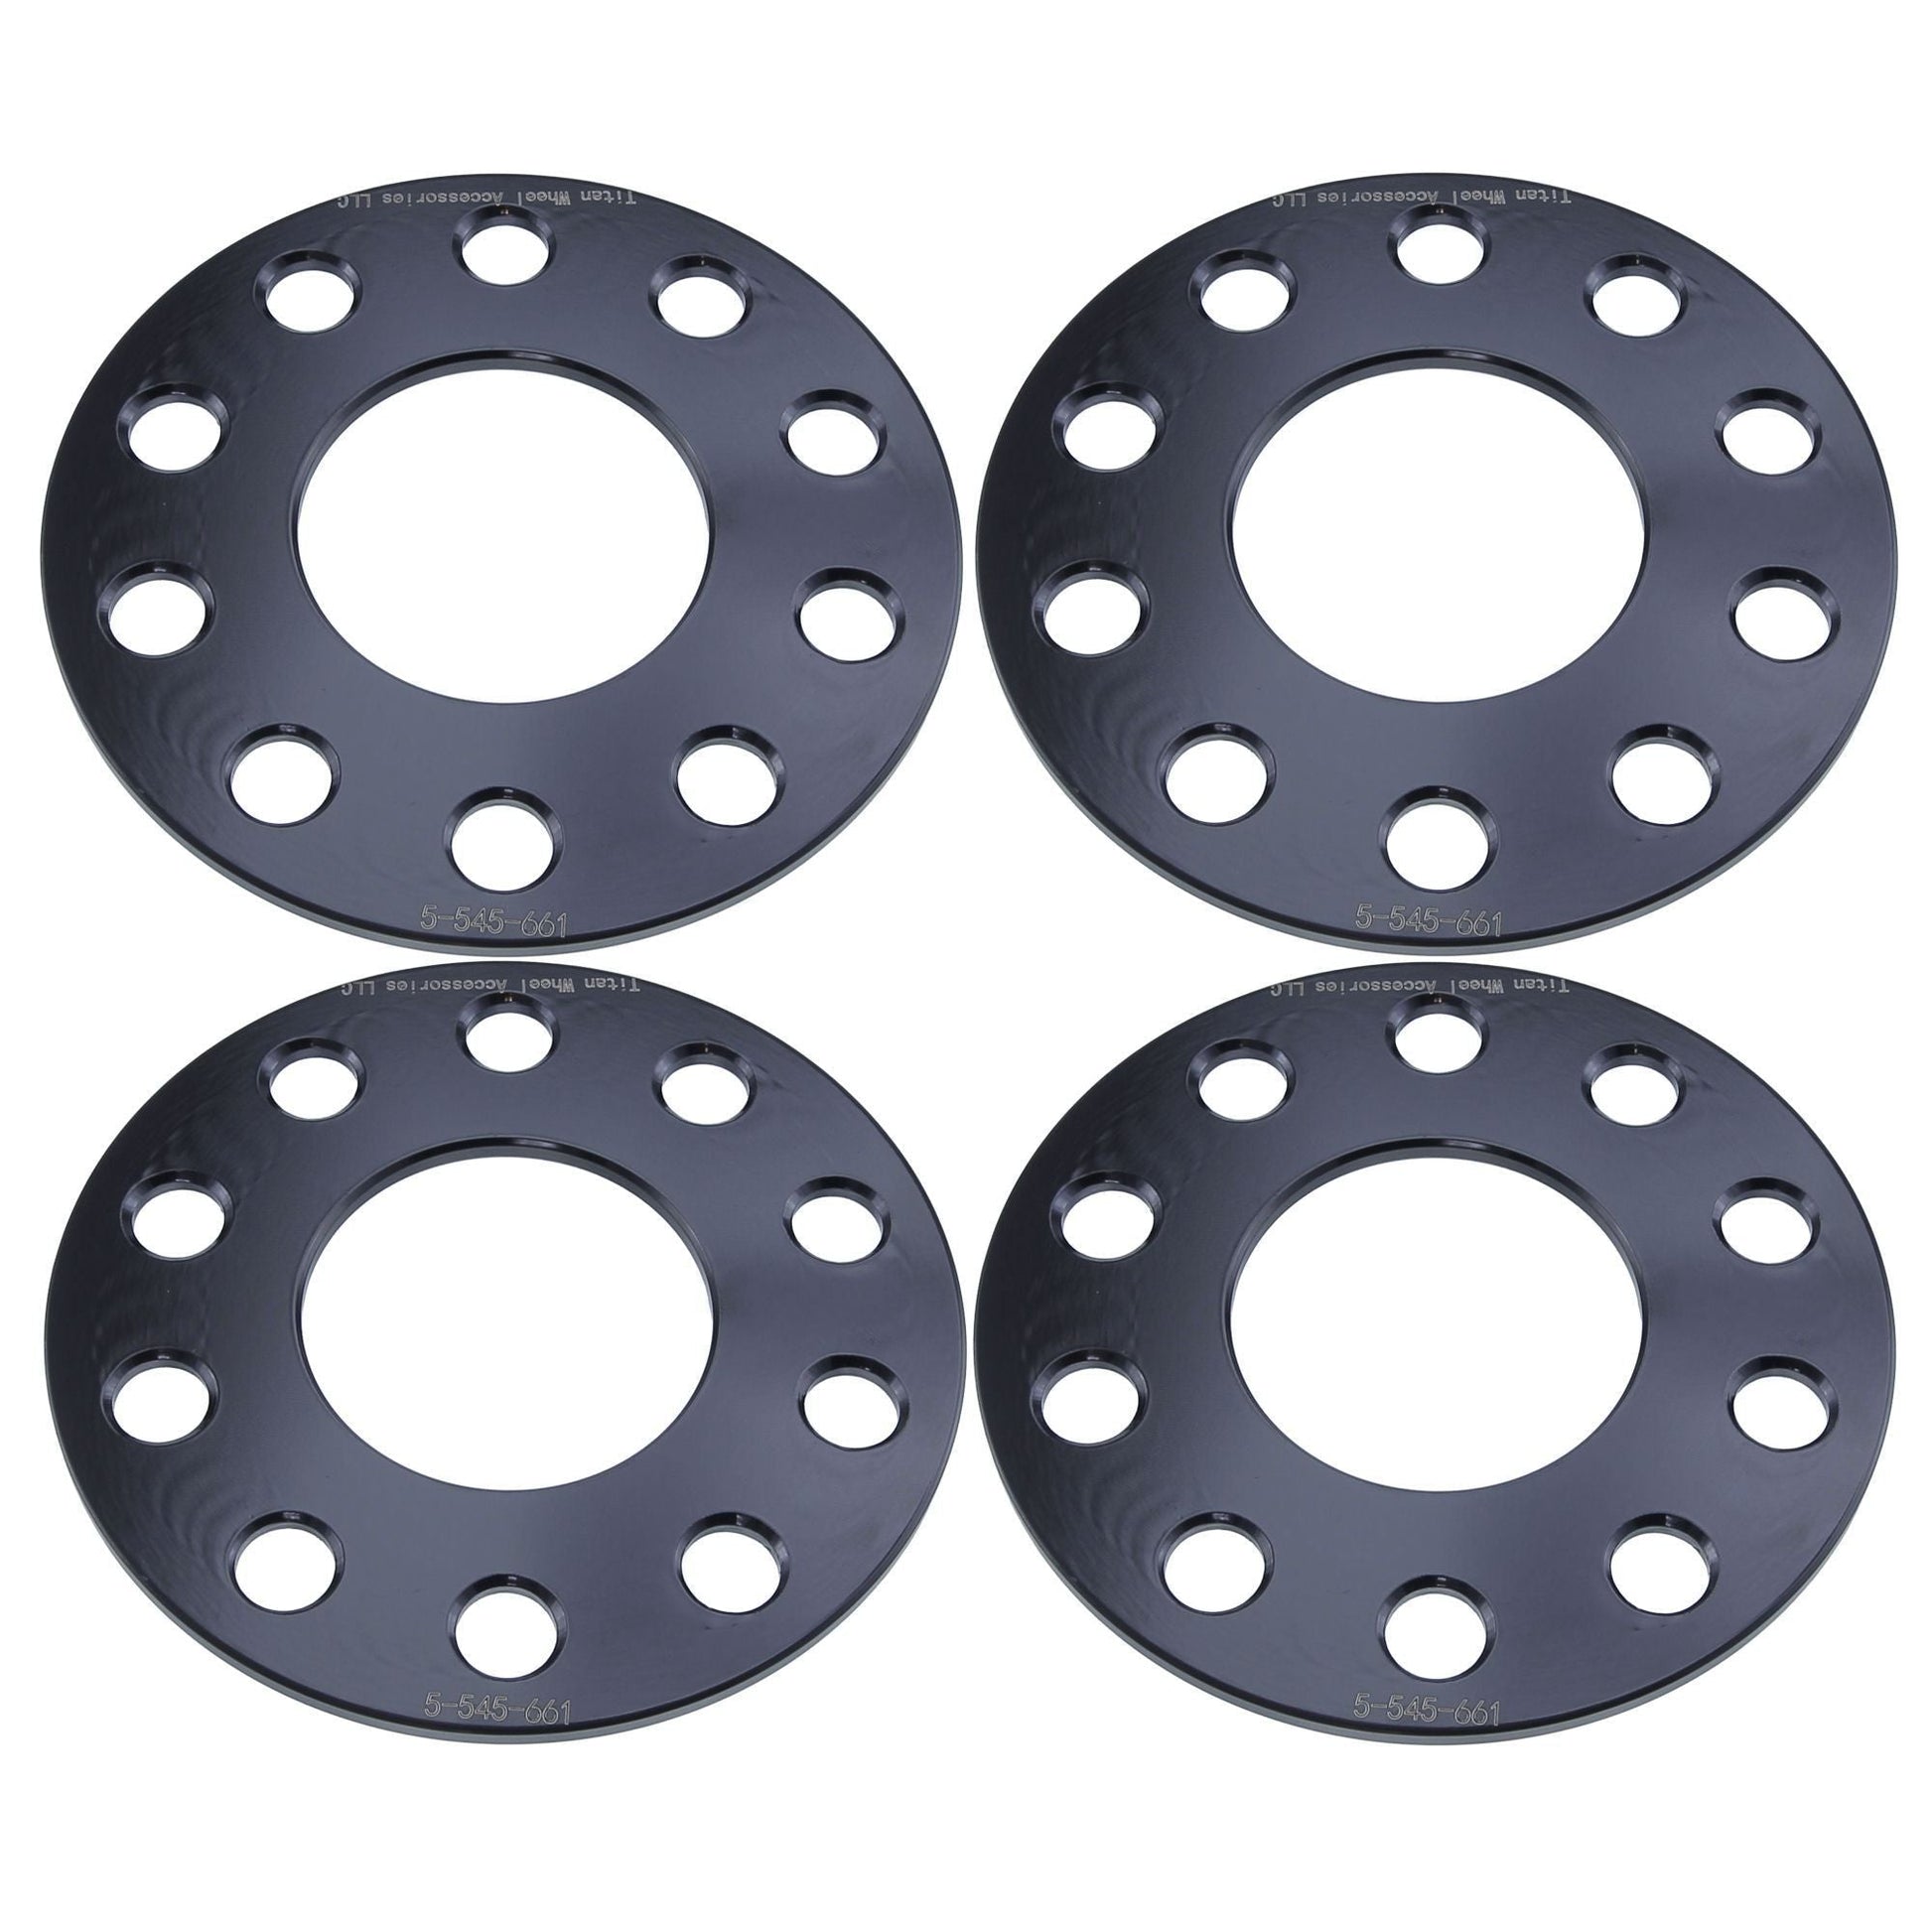 5mm Titan Wheel Spacers for Nissan Infiniti Q50 G35 G37 350z 370z Altima Maxima | 5x114.3 | 66.1 Hubcentric | Set of 4 | Titan Wheel Accessories